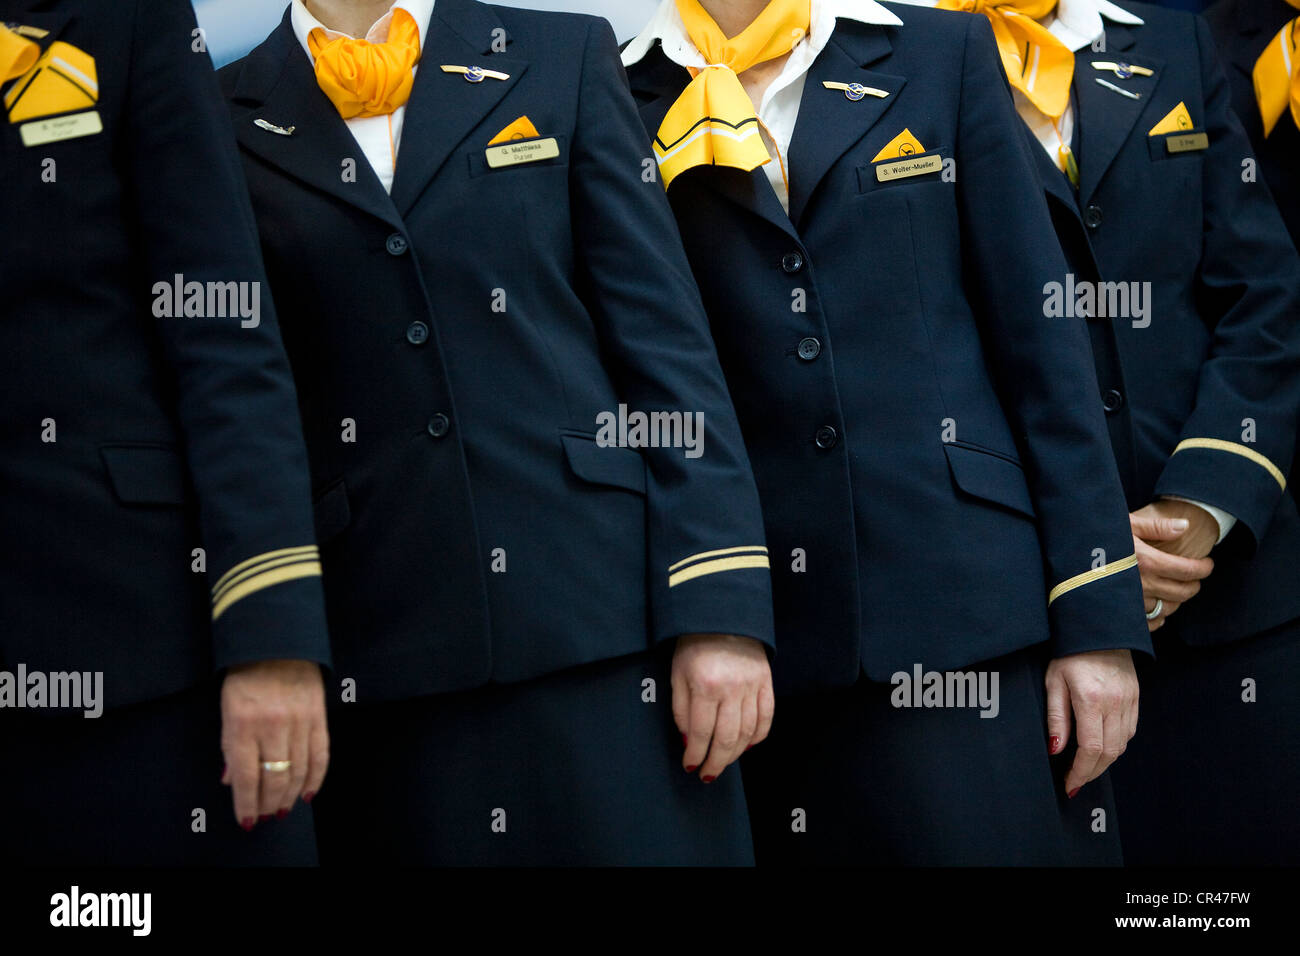 Lufthansa Airlines asistentes de vuelo. Foto de stock